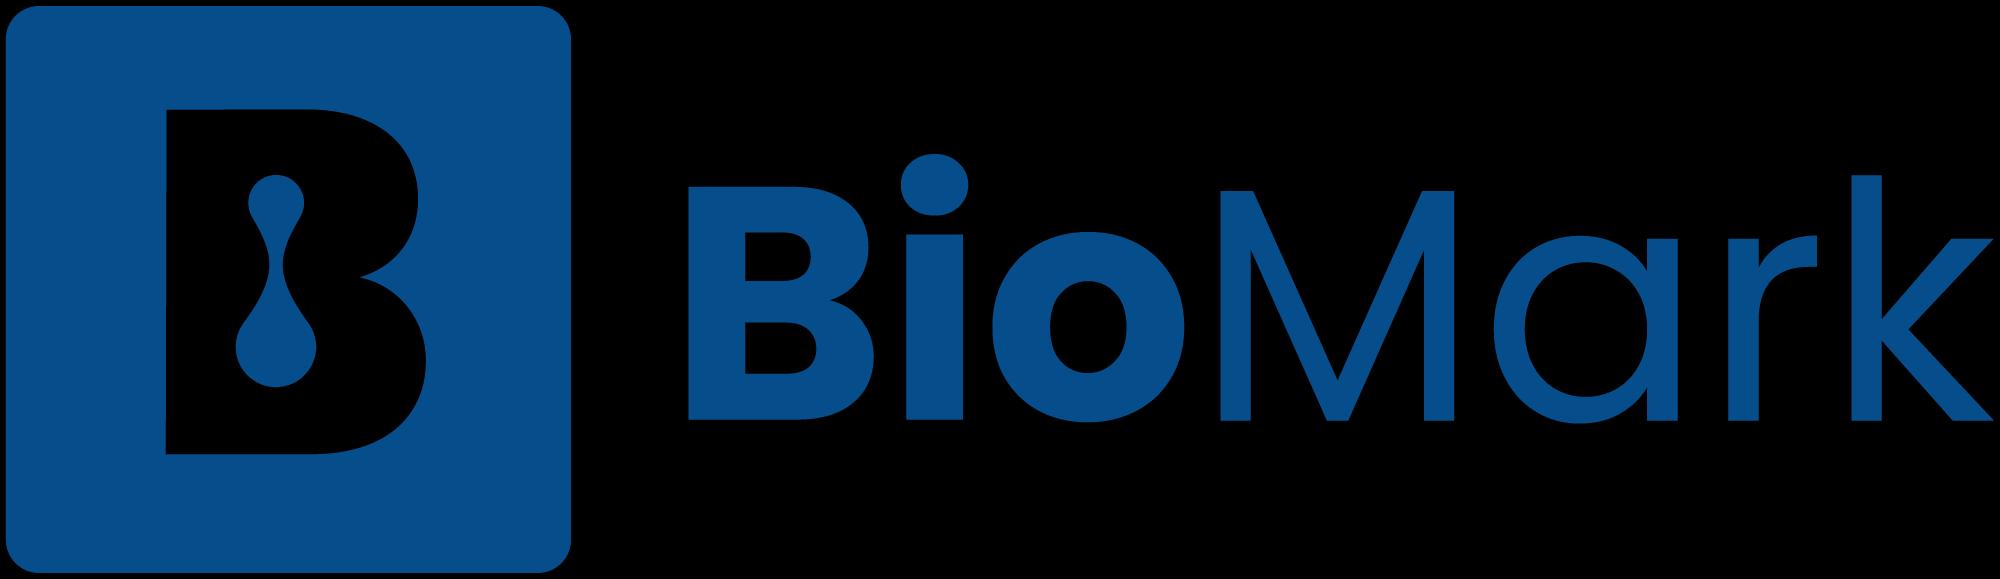 BioMark_logo